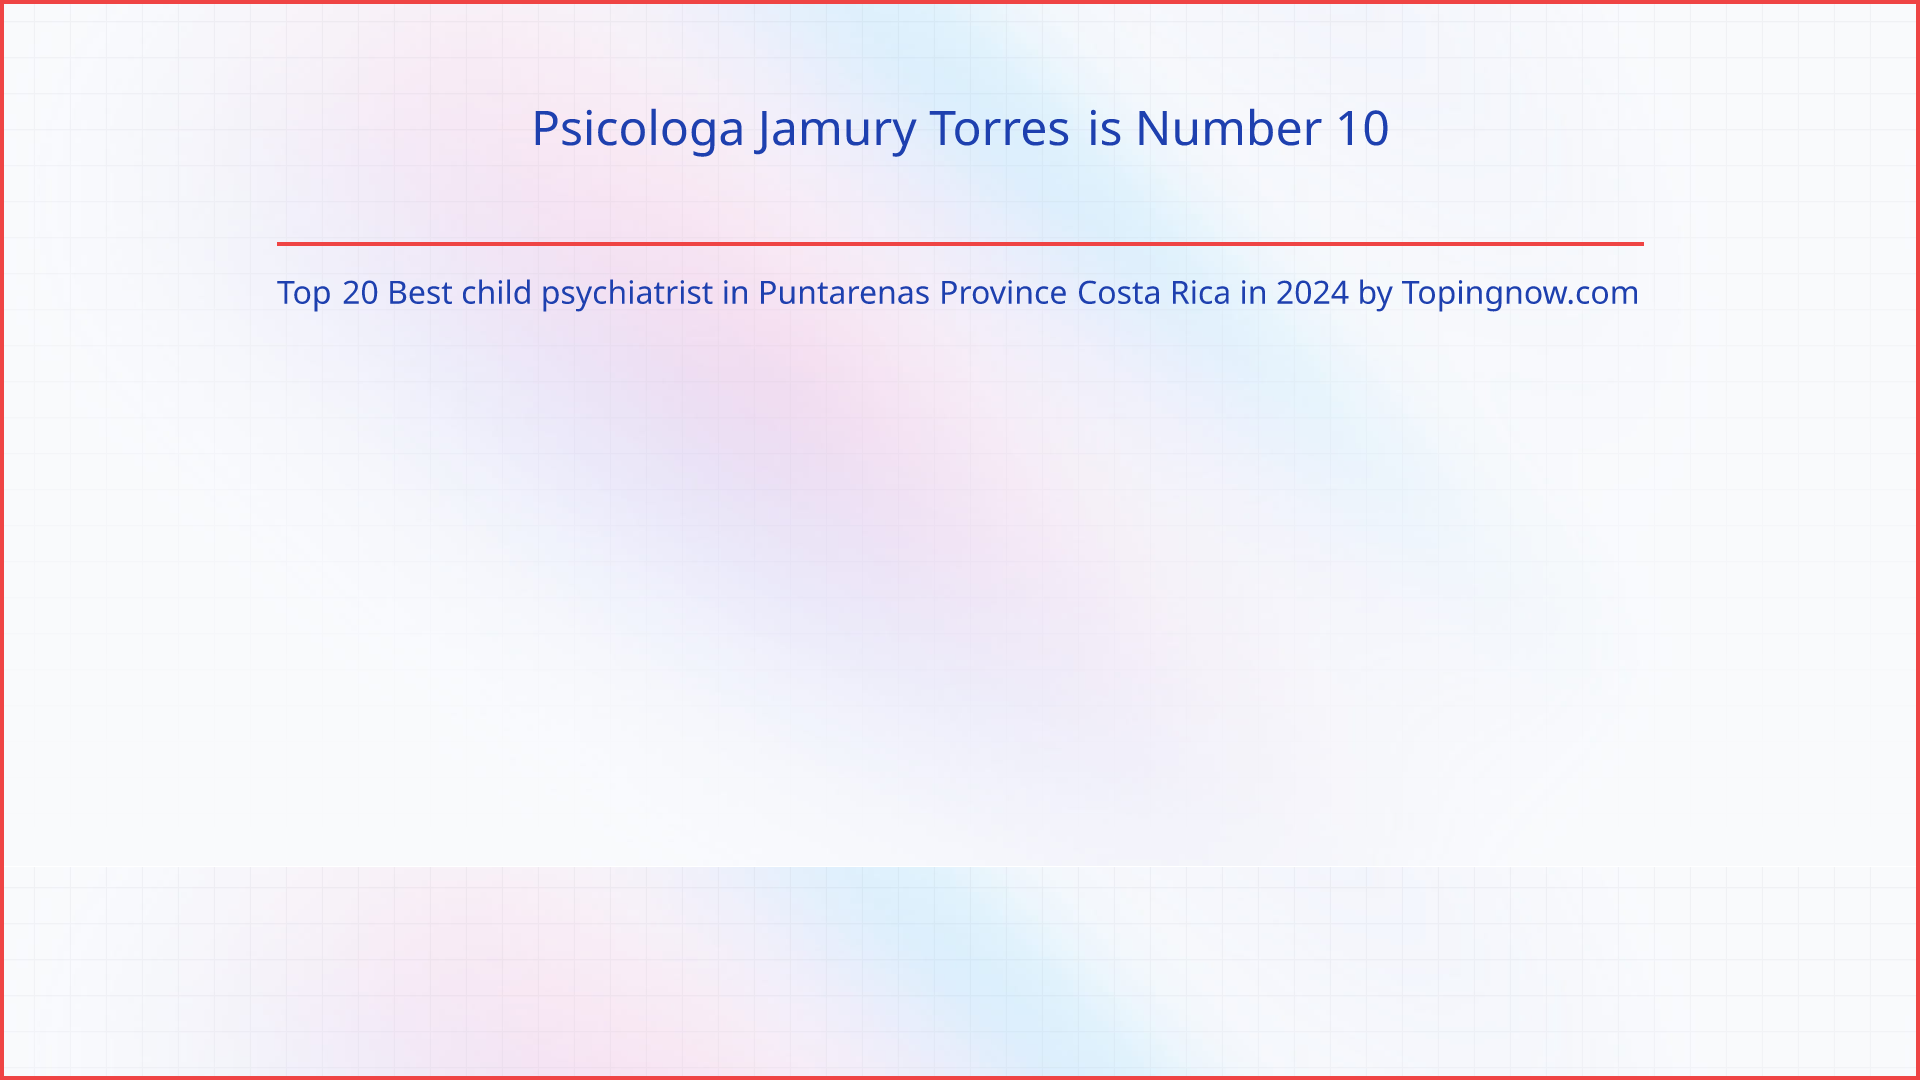 Psicologa Jamury Torres: Top 20 Best child psychiatrist in Puntarenas Province Costa Rica in 2024